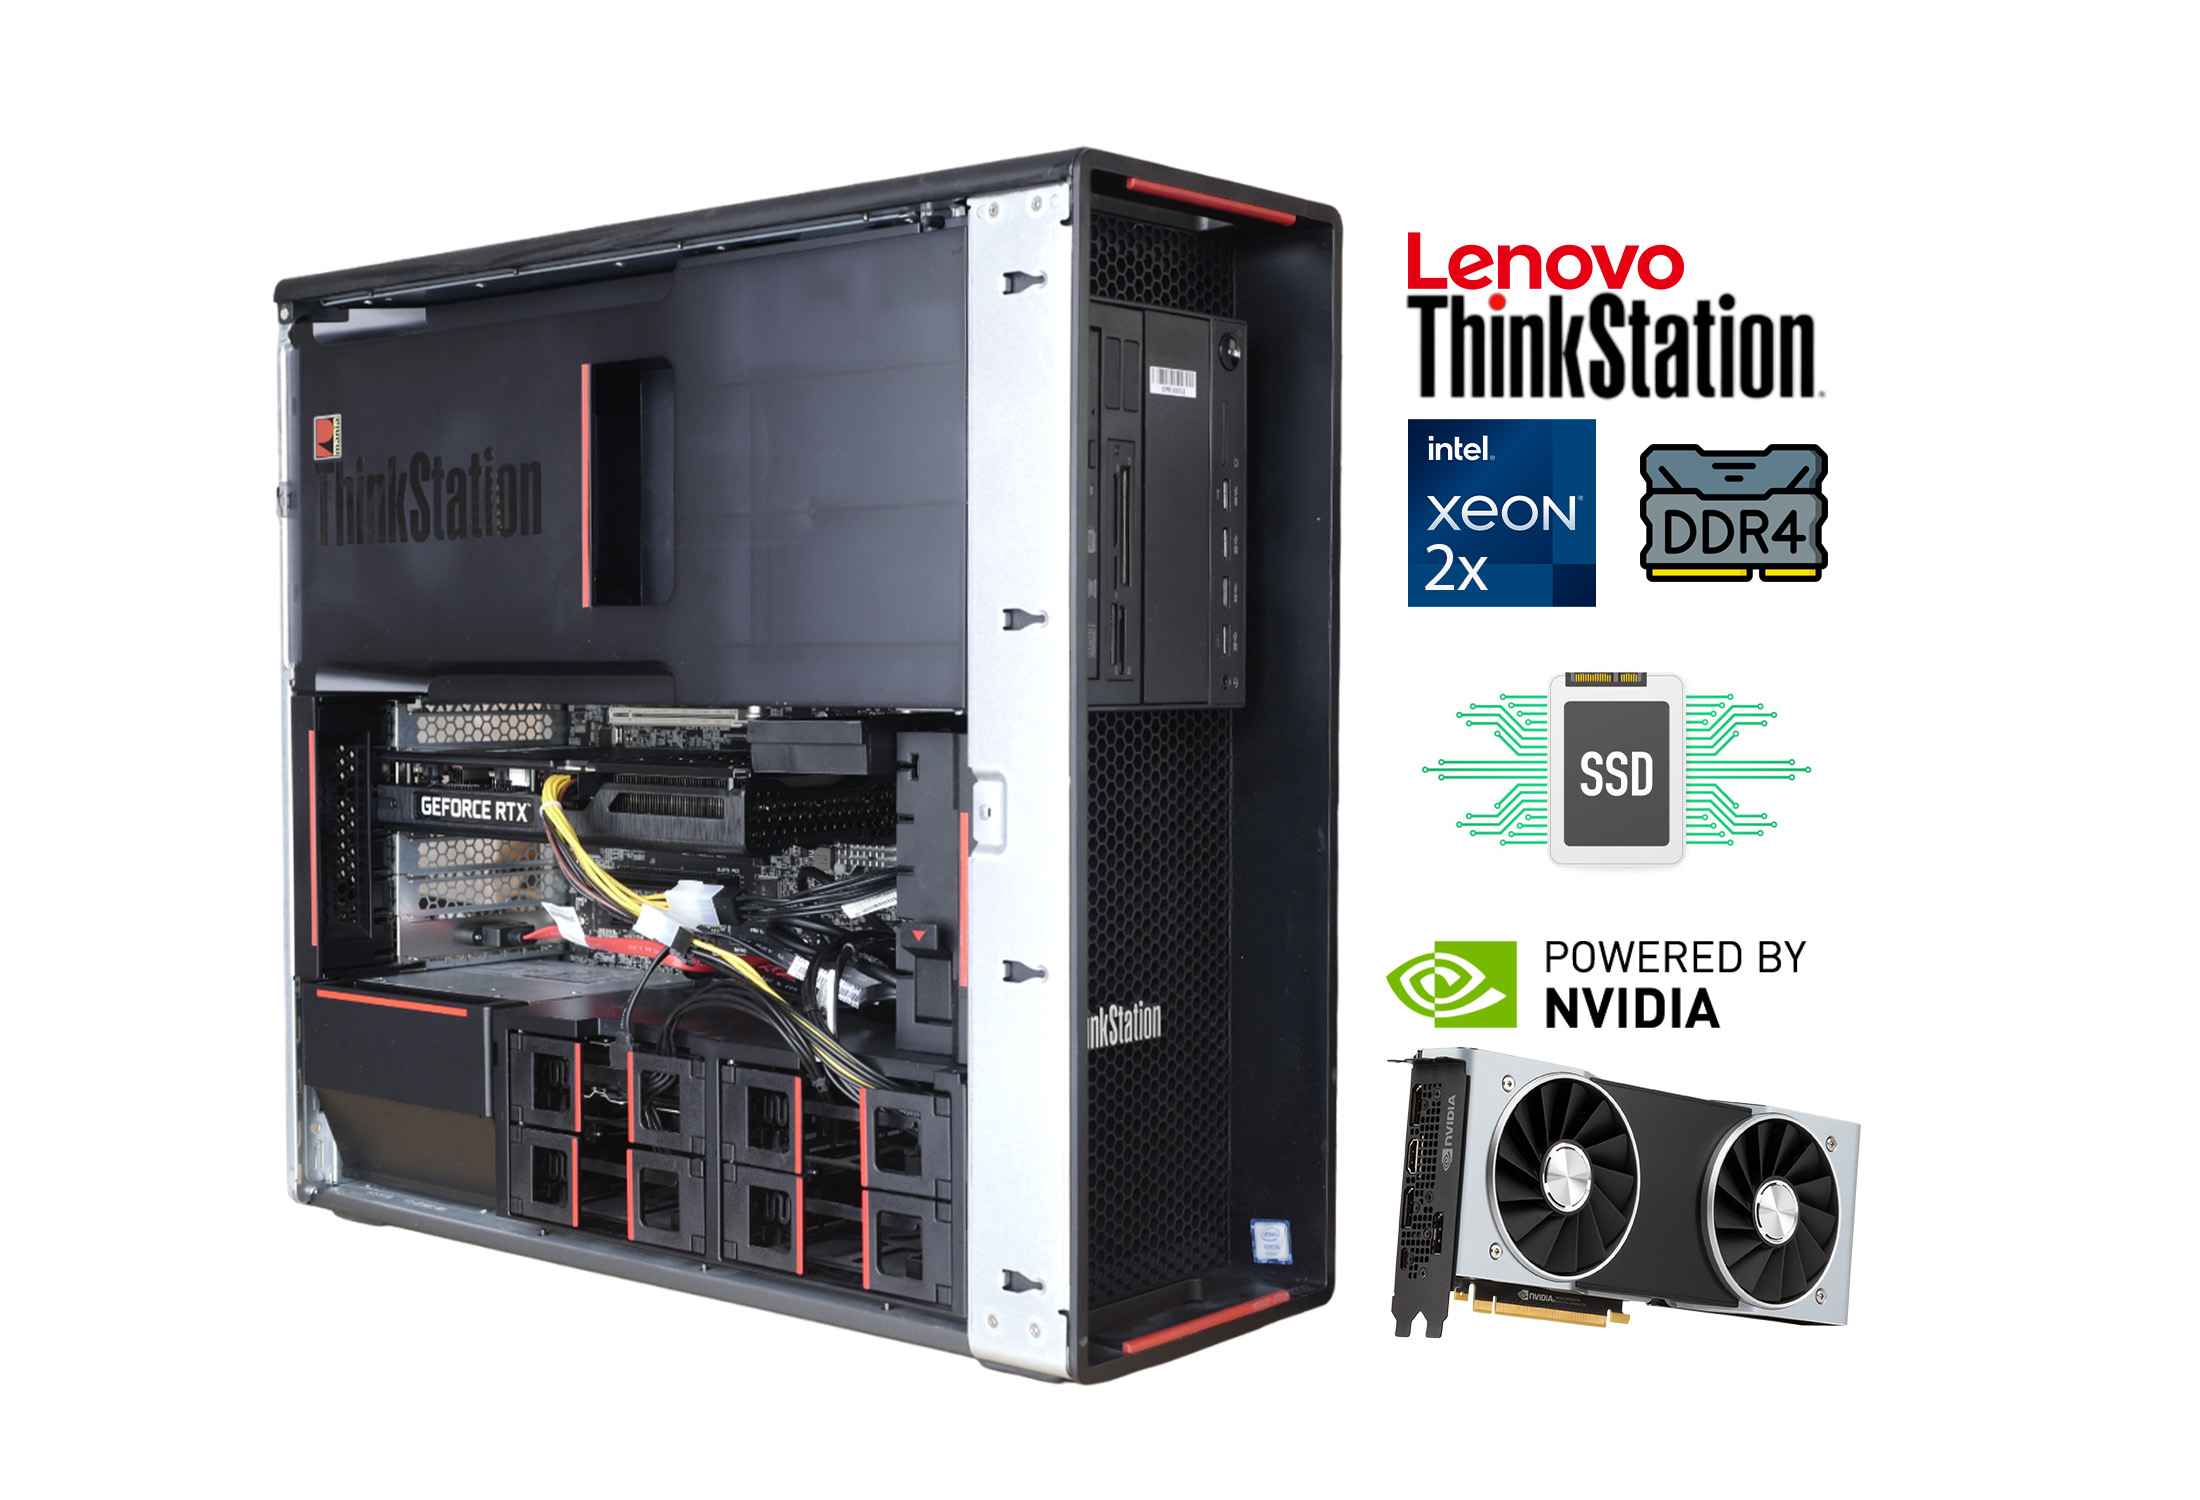 Lenovo Thinkstation P700 2x Xeon E5-2620 v3 SSD GTX 1060